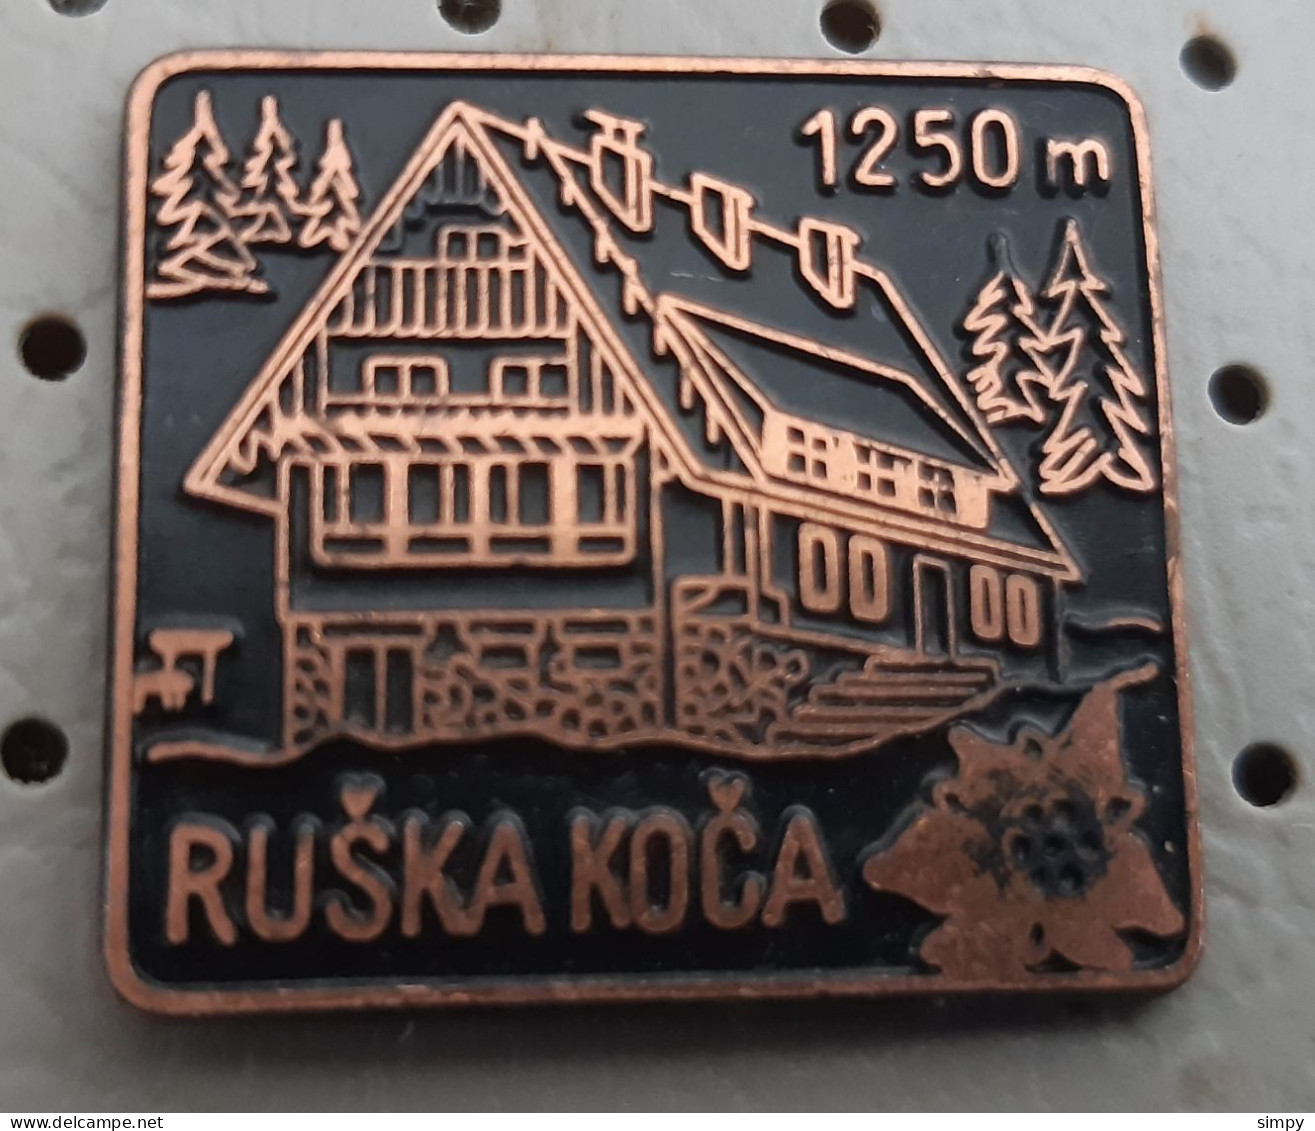 Ruska Koca 1250m Mountain Lodge Mountaineering Slovenia Ex Yugoslavia Pin - Alpinismus, Bergsteigen